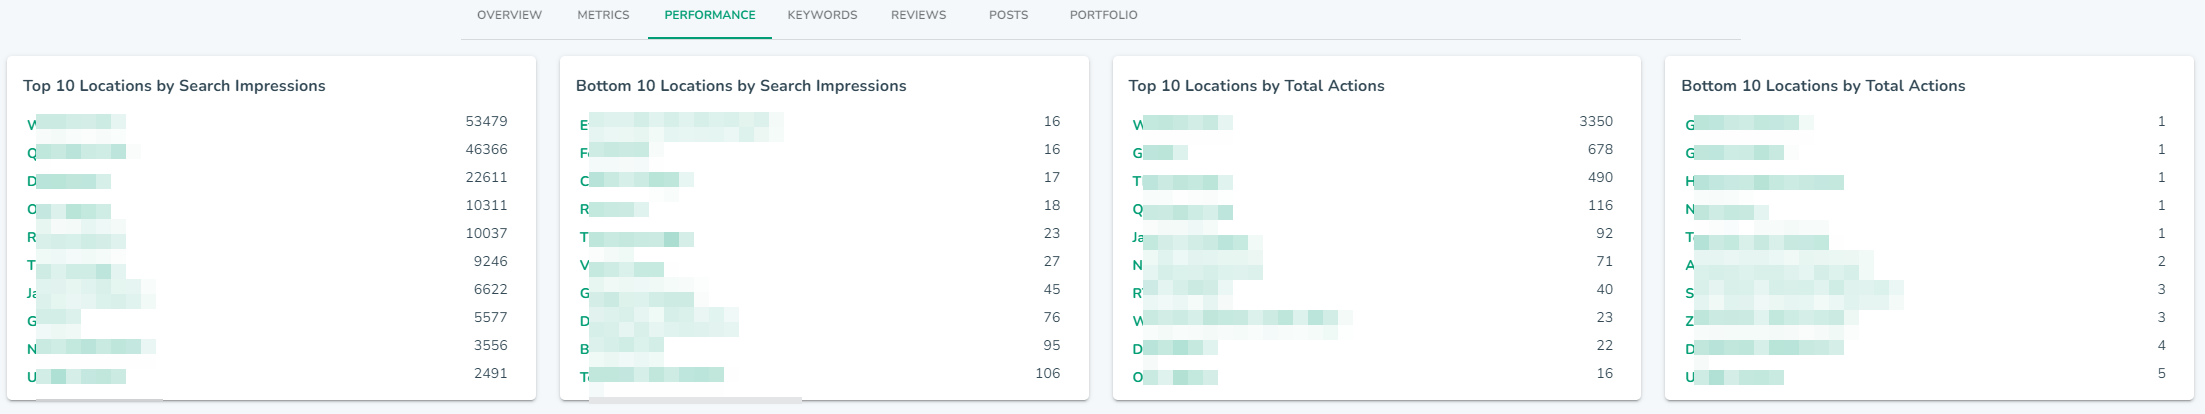 Google Business Profile performance view top performing locations on digitalmaas platform